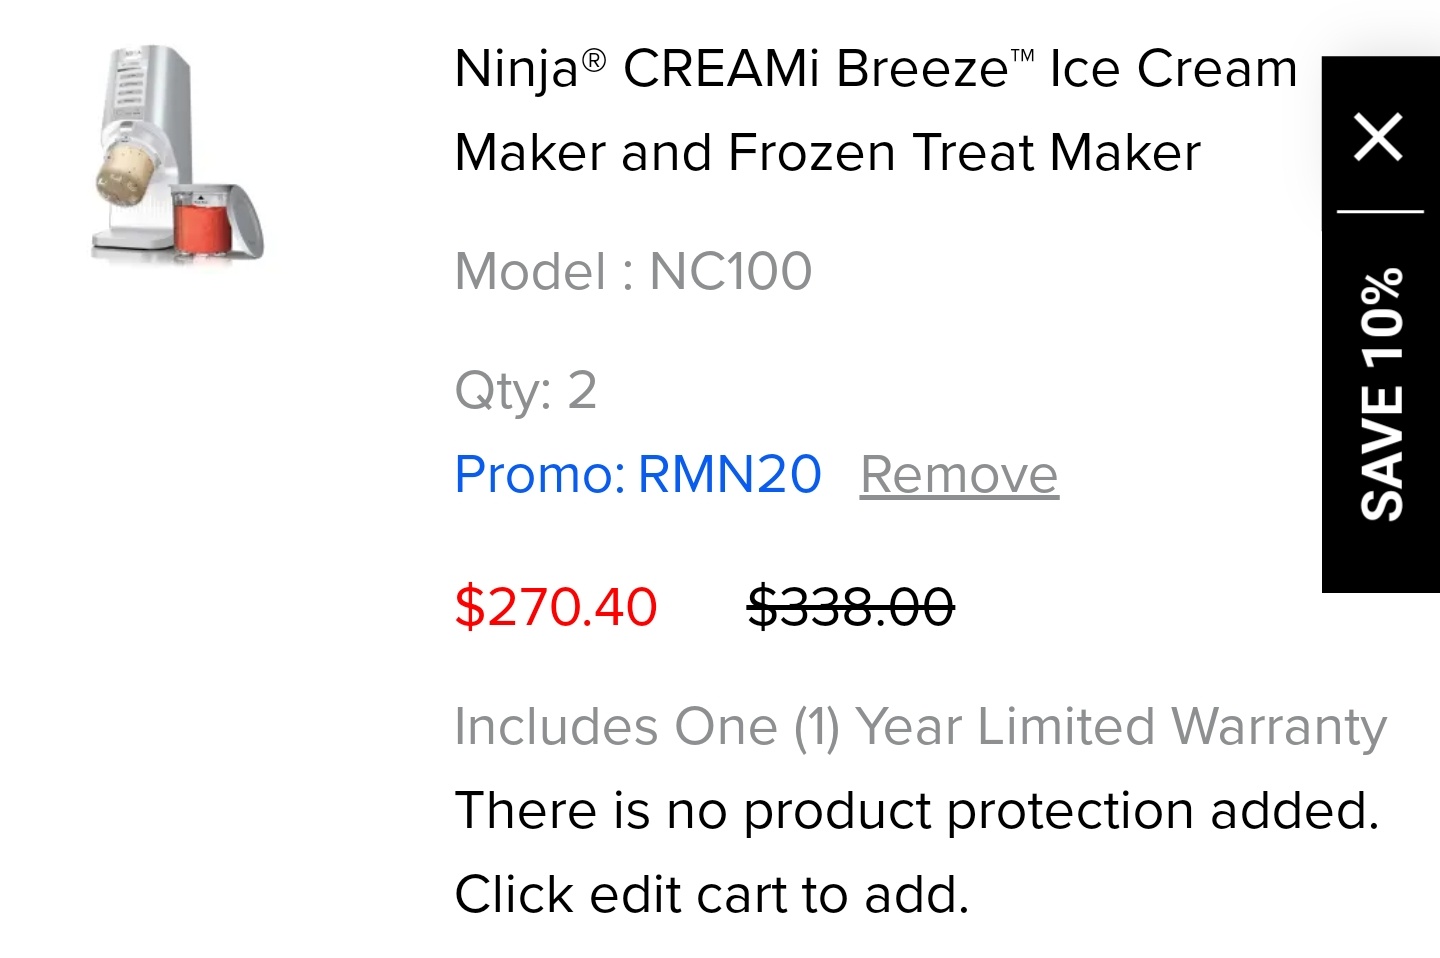 Deal Vibes on X: Use code RMN20 if buying 2 or more Ninja CREAMi